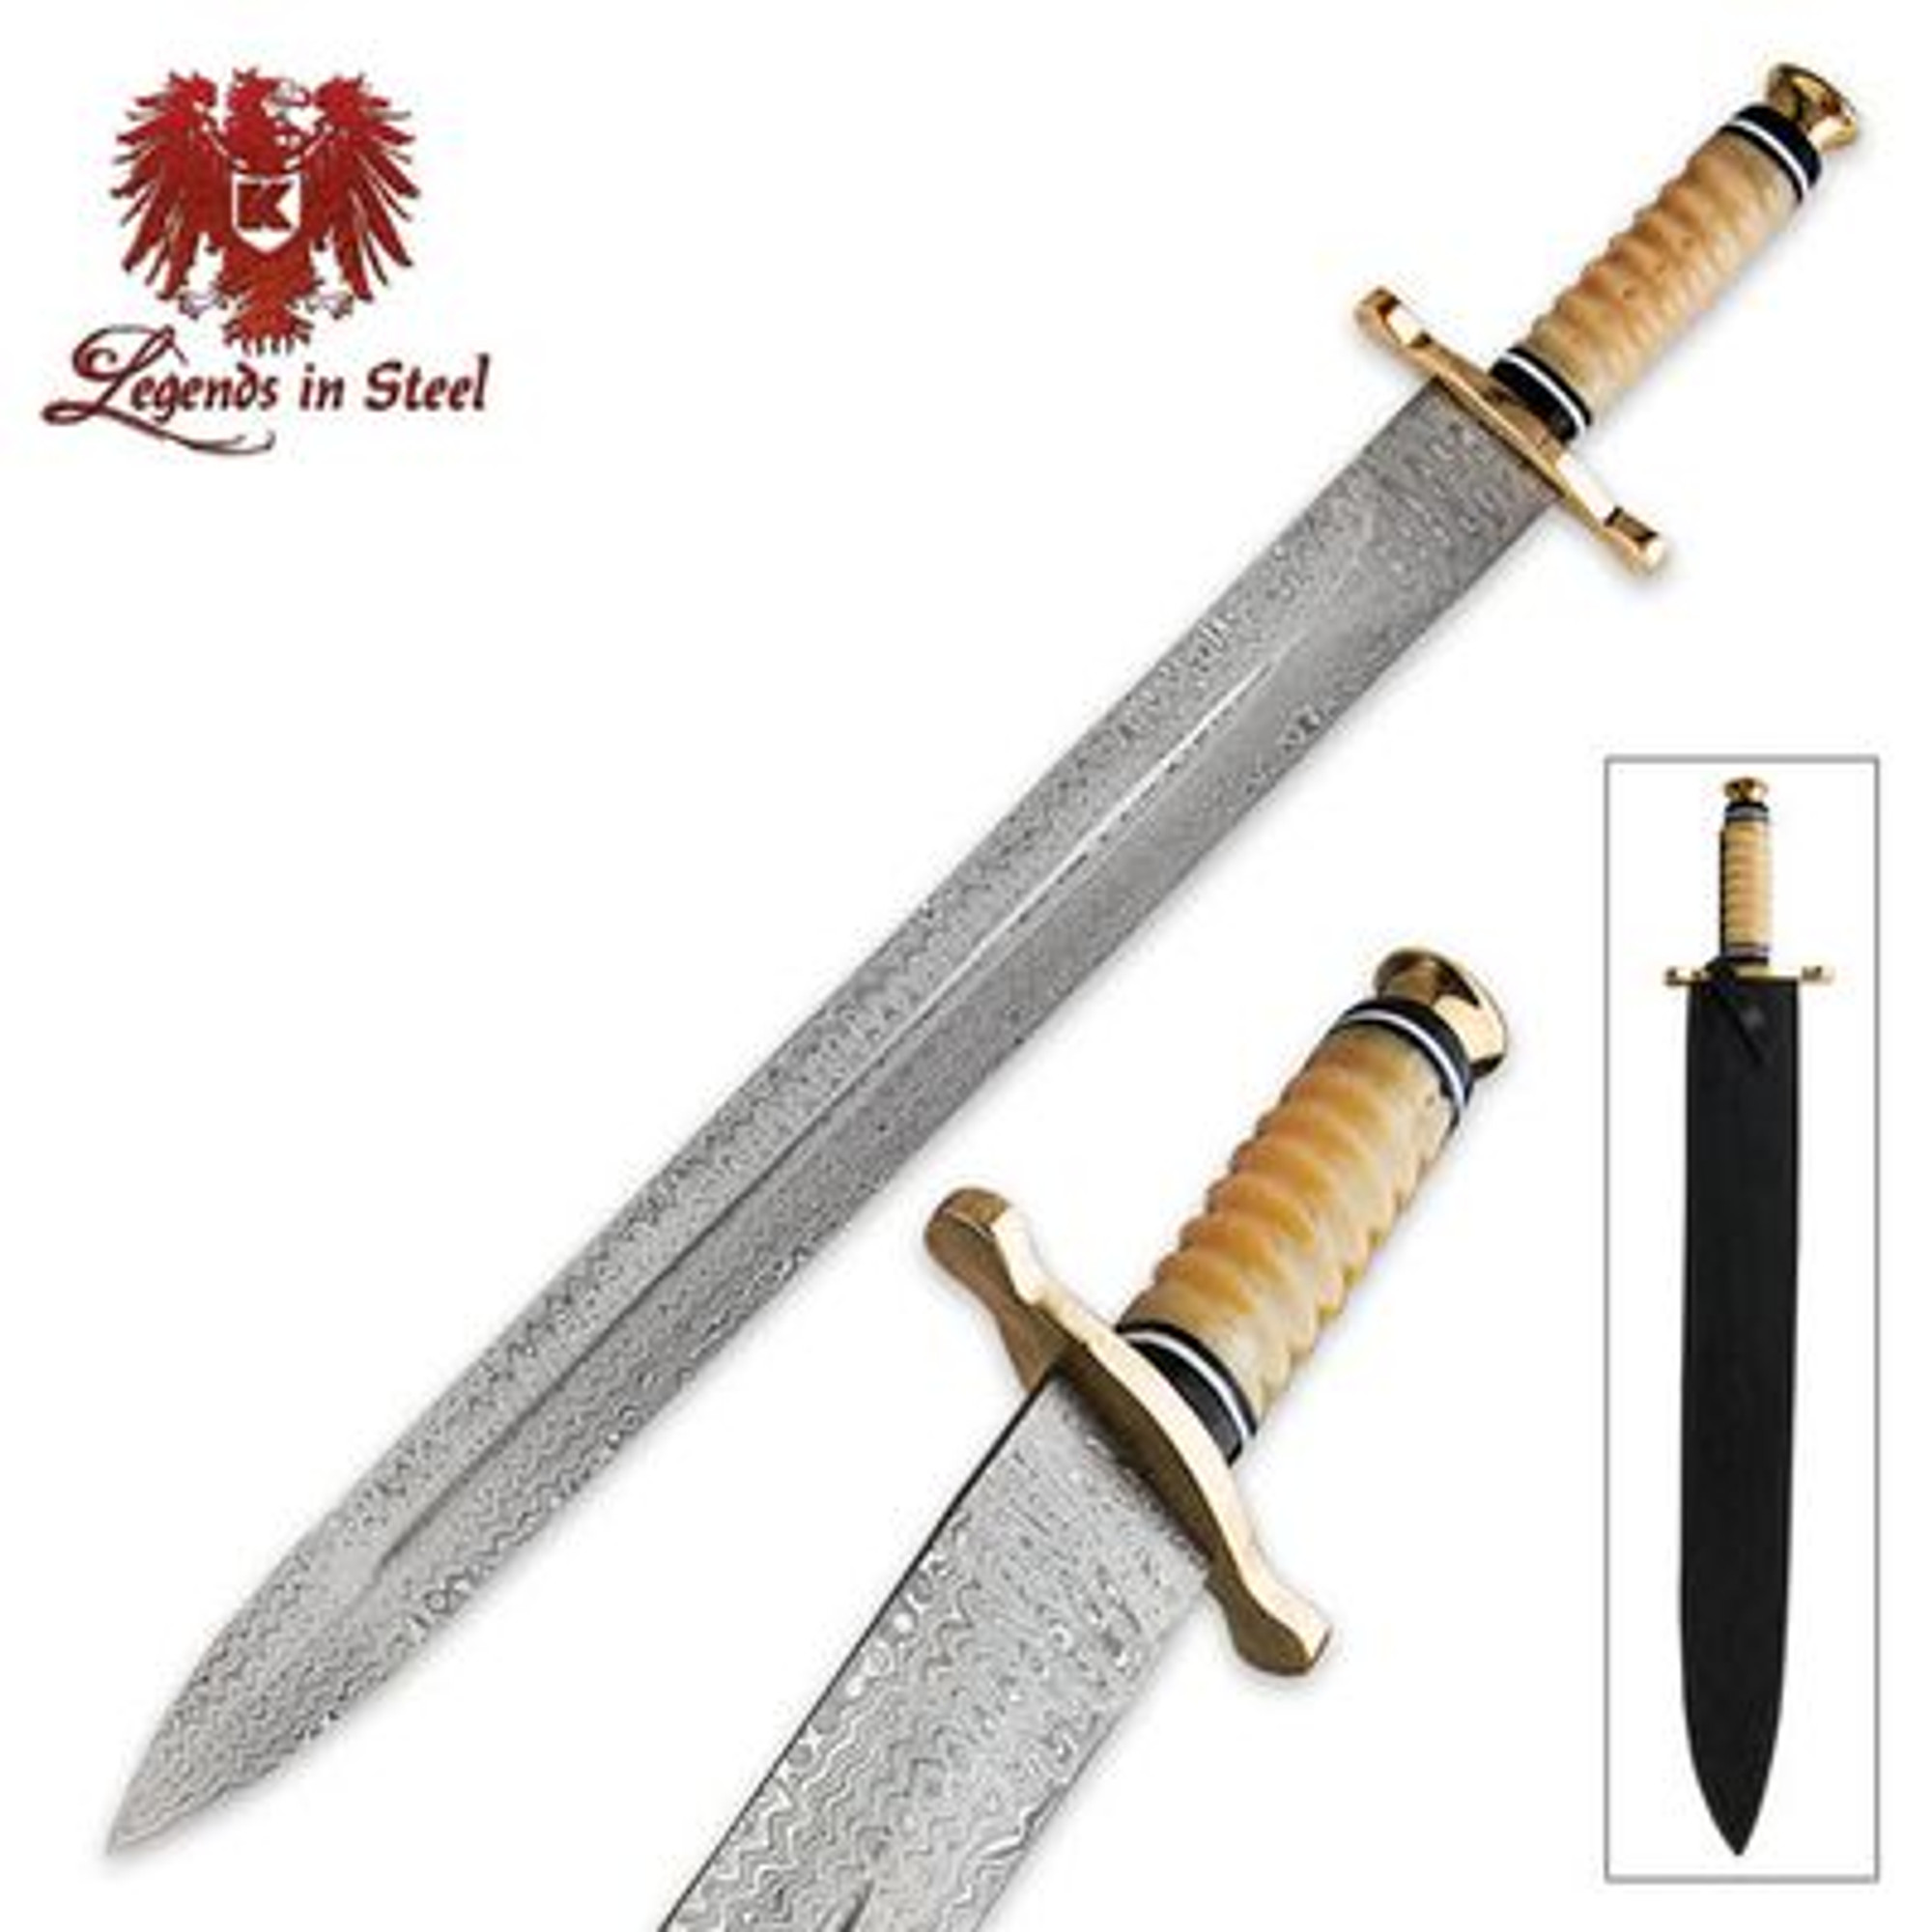 Legends In Steel Genuine Bone & Damascus Steel Sword